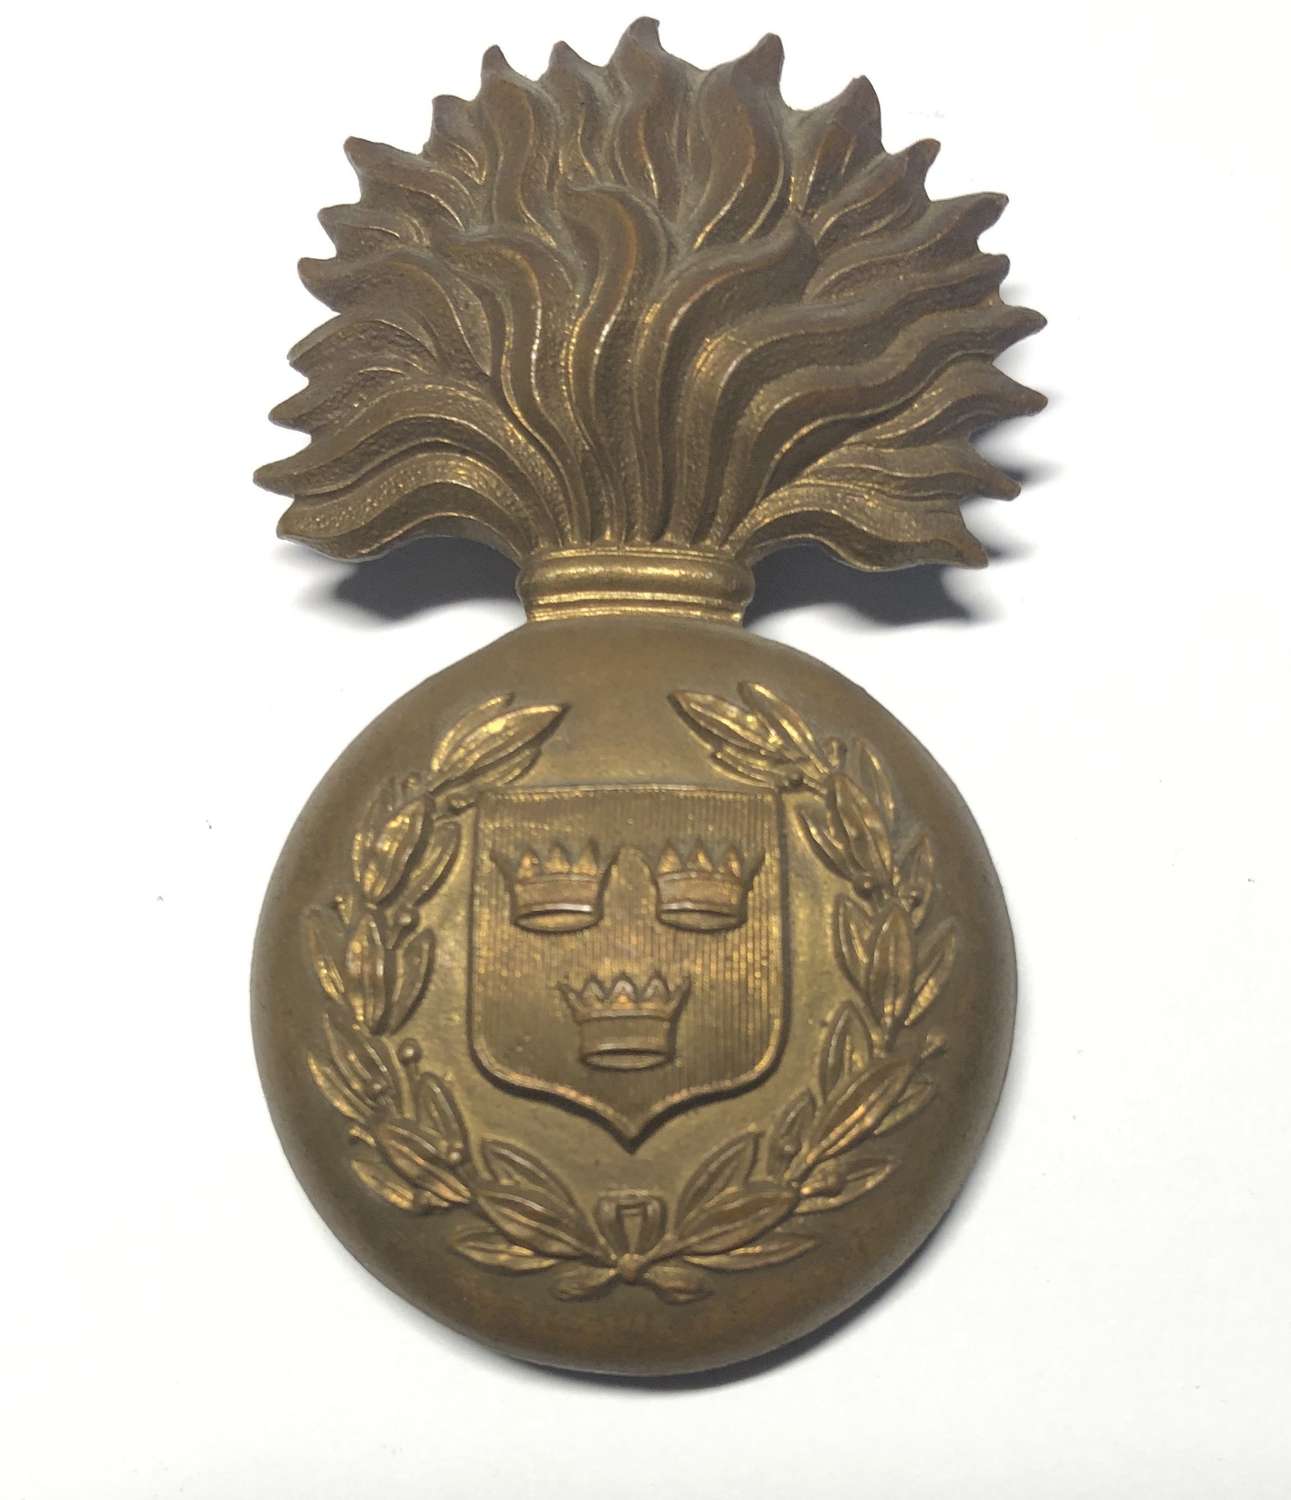 Irish Royal Munster Fusiliers Victorian glengarry badge circa 1881-96